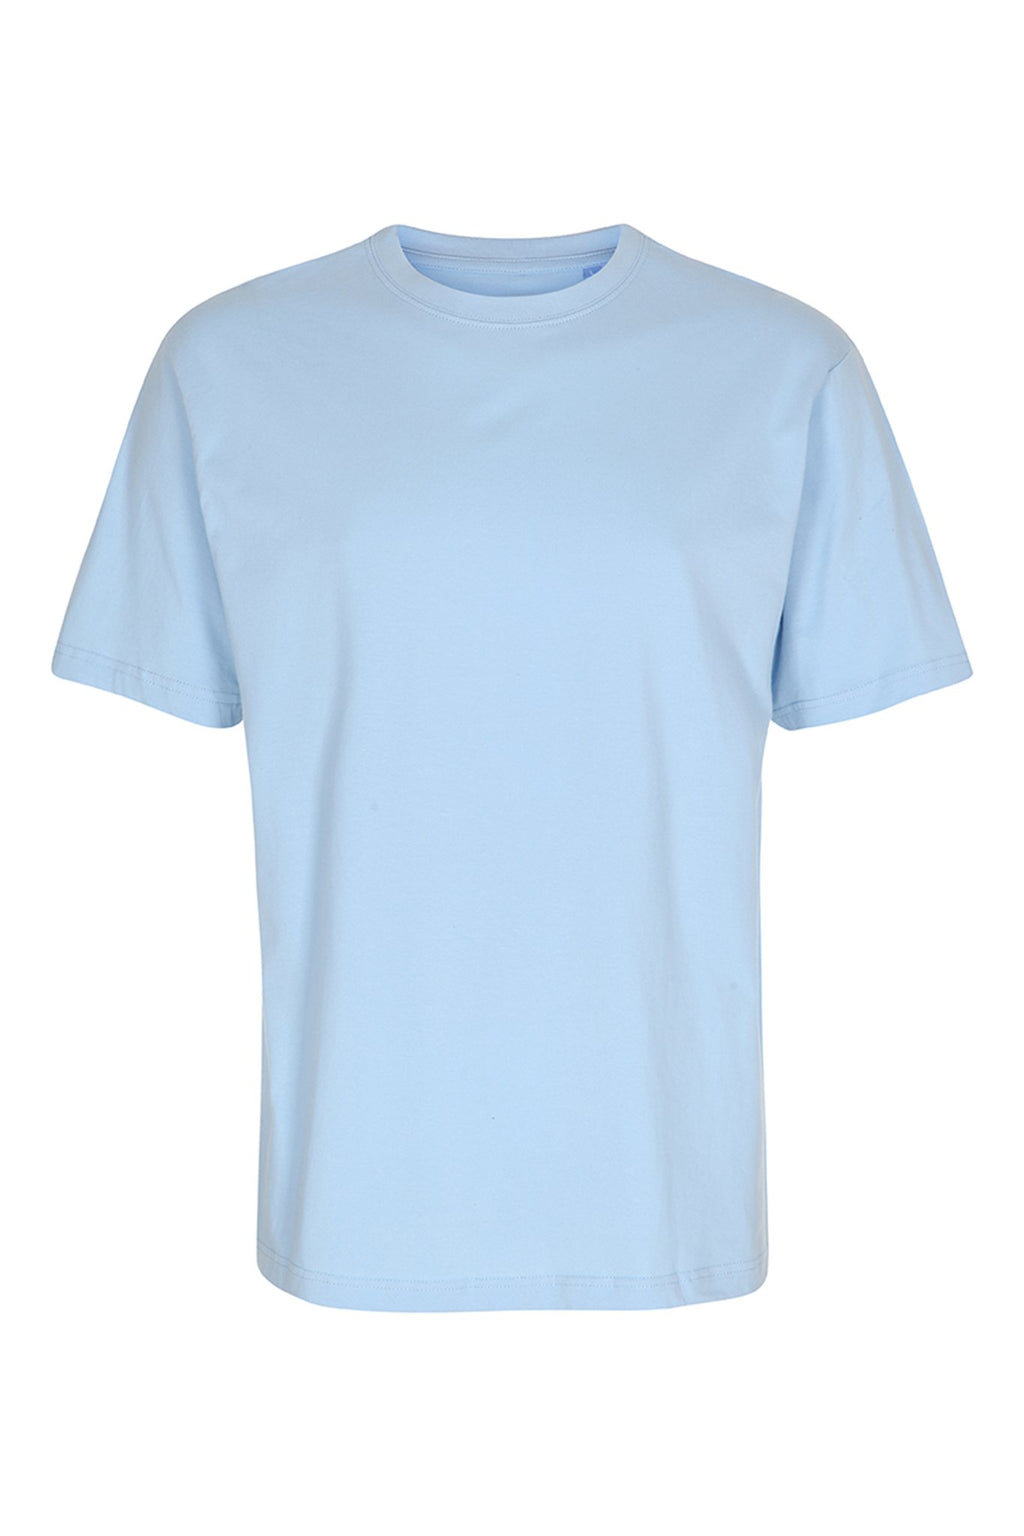 Camiseta básica para niños - azul claro